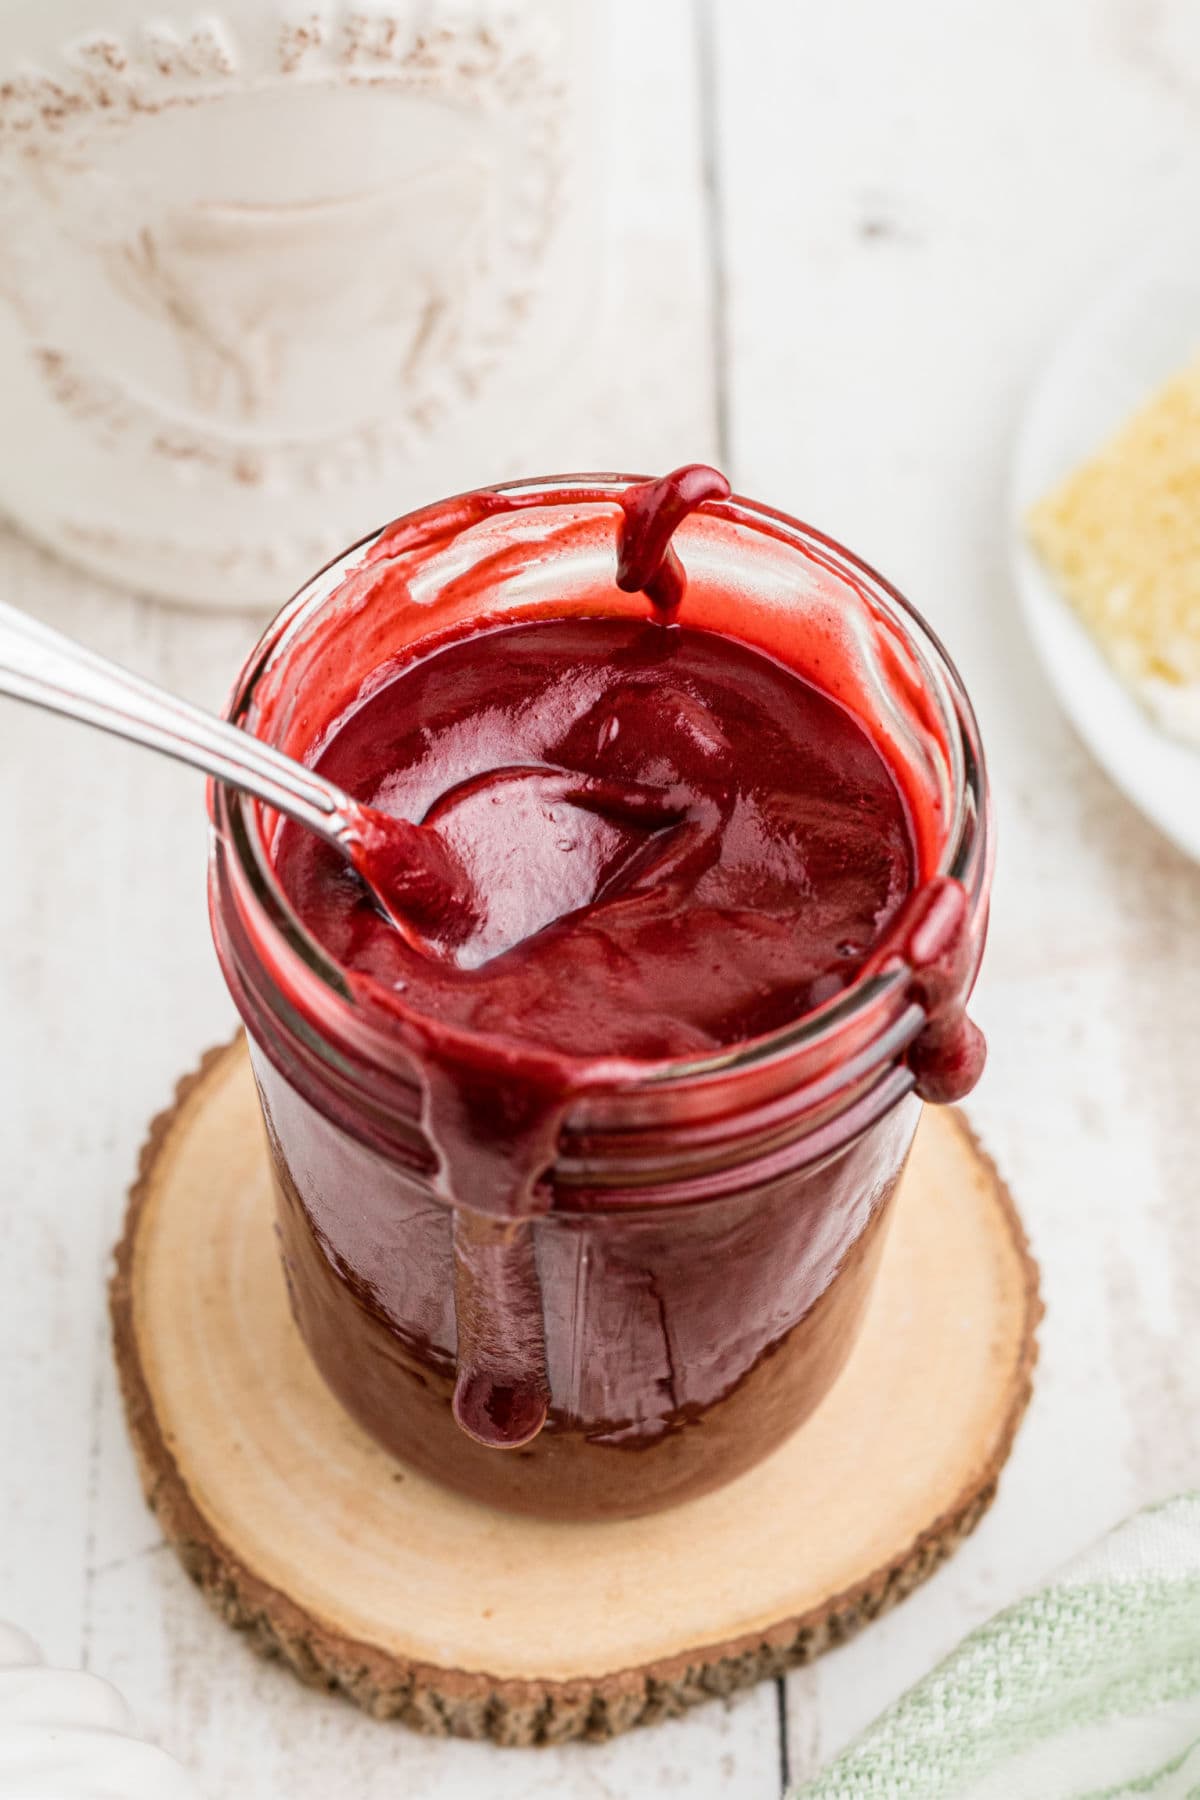 Overhead view of red velvet hot fudge sauce in a jar.